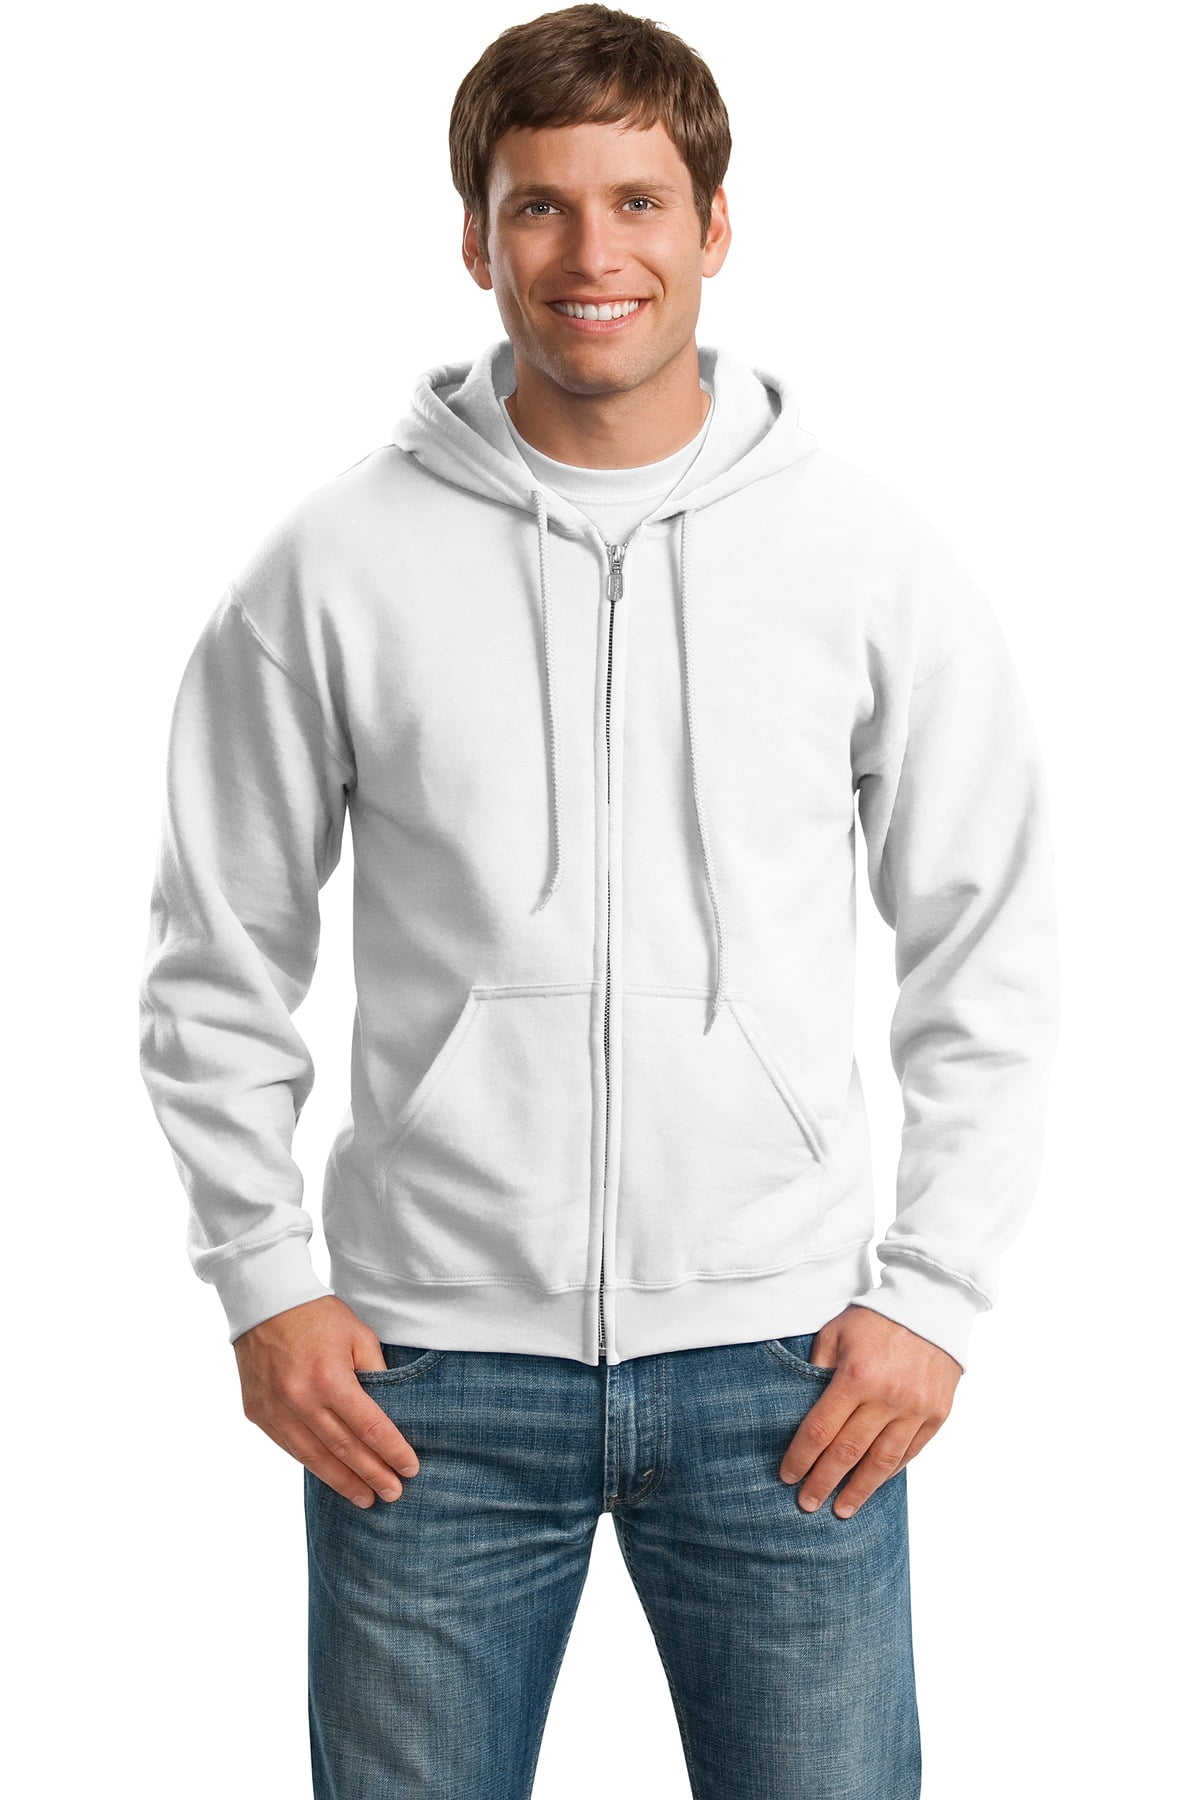 Unisex Heavy Blend Full Zip Hooded Sweatshirt